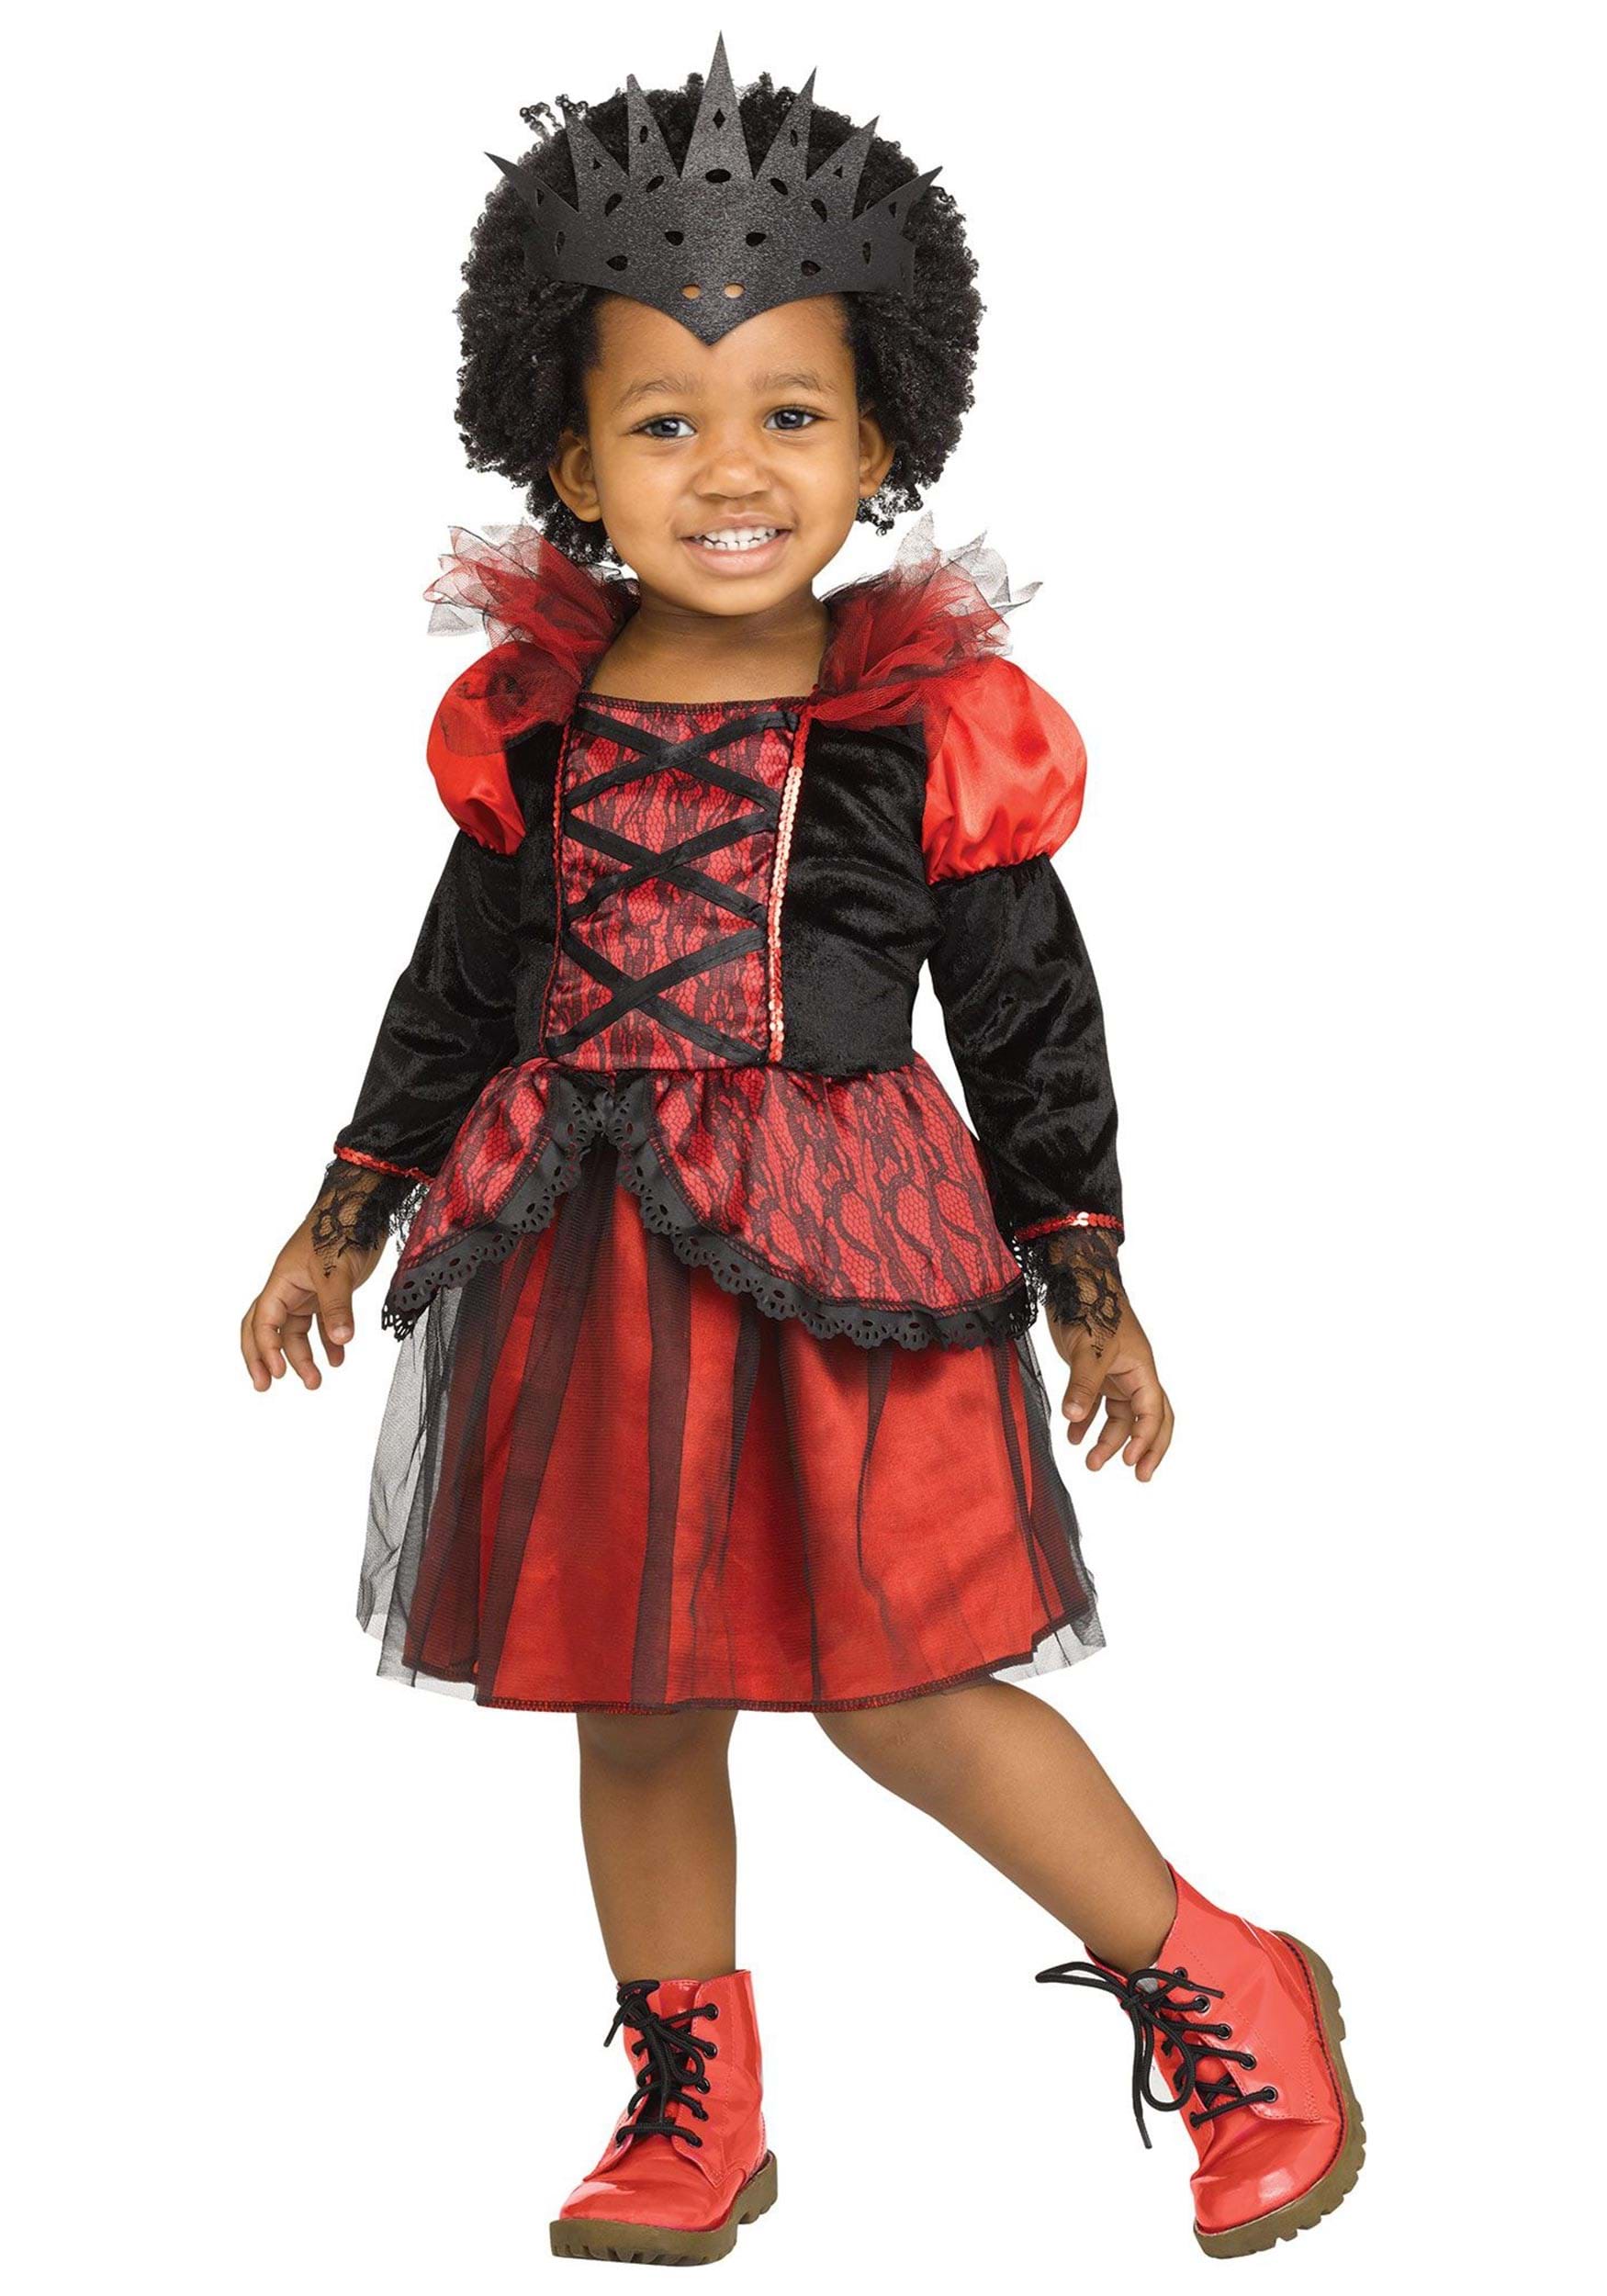 Photos - Fancy Dress Fun World Girl's Ruby Vampiress Toddler Costume Dress Black/Red FU1199